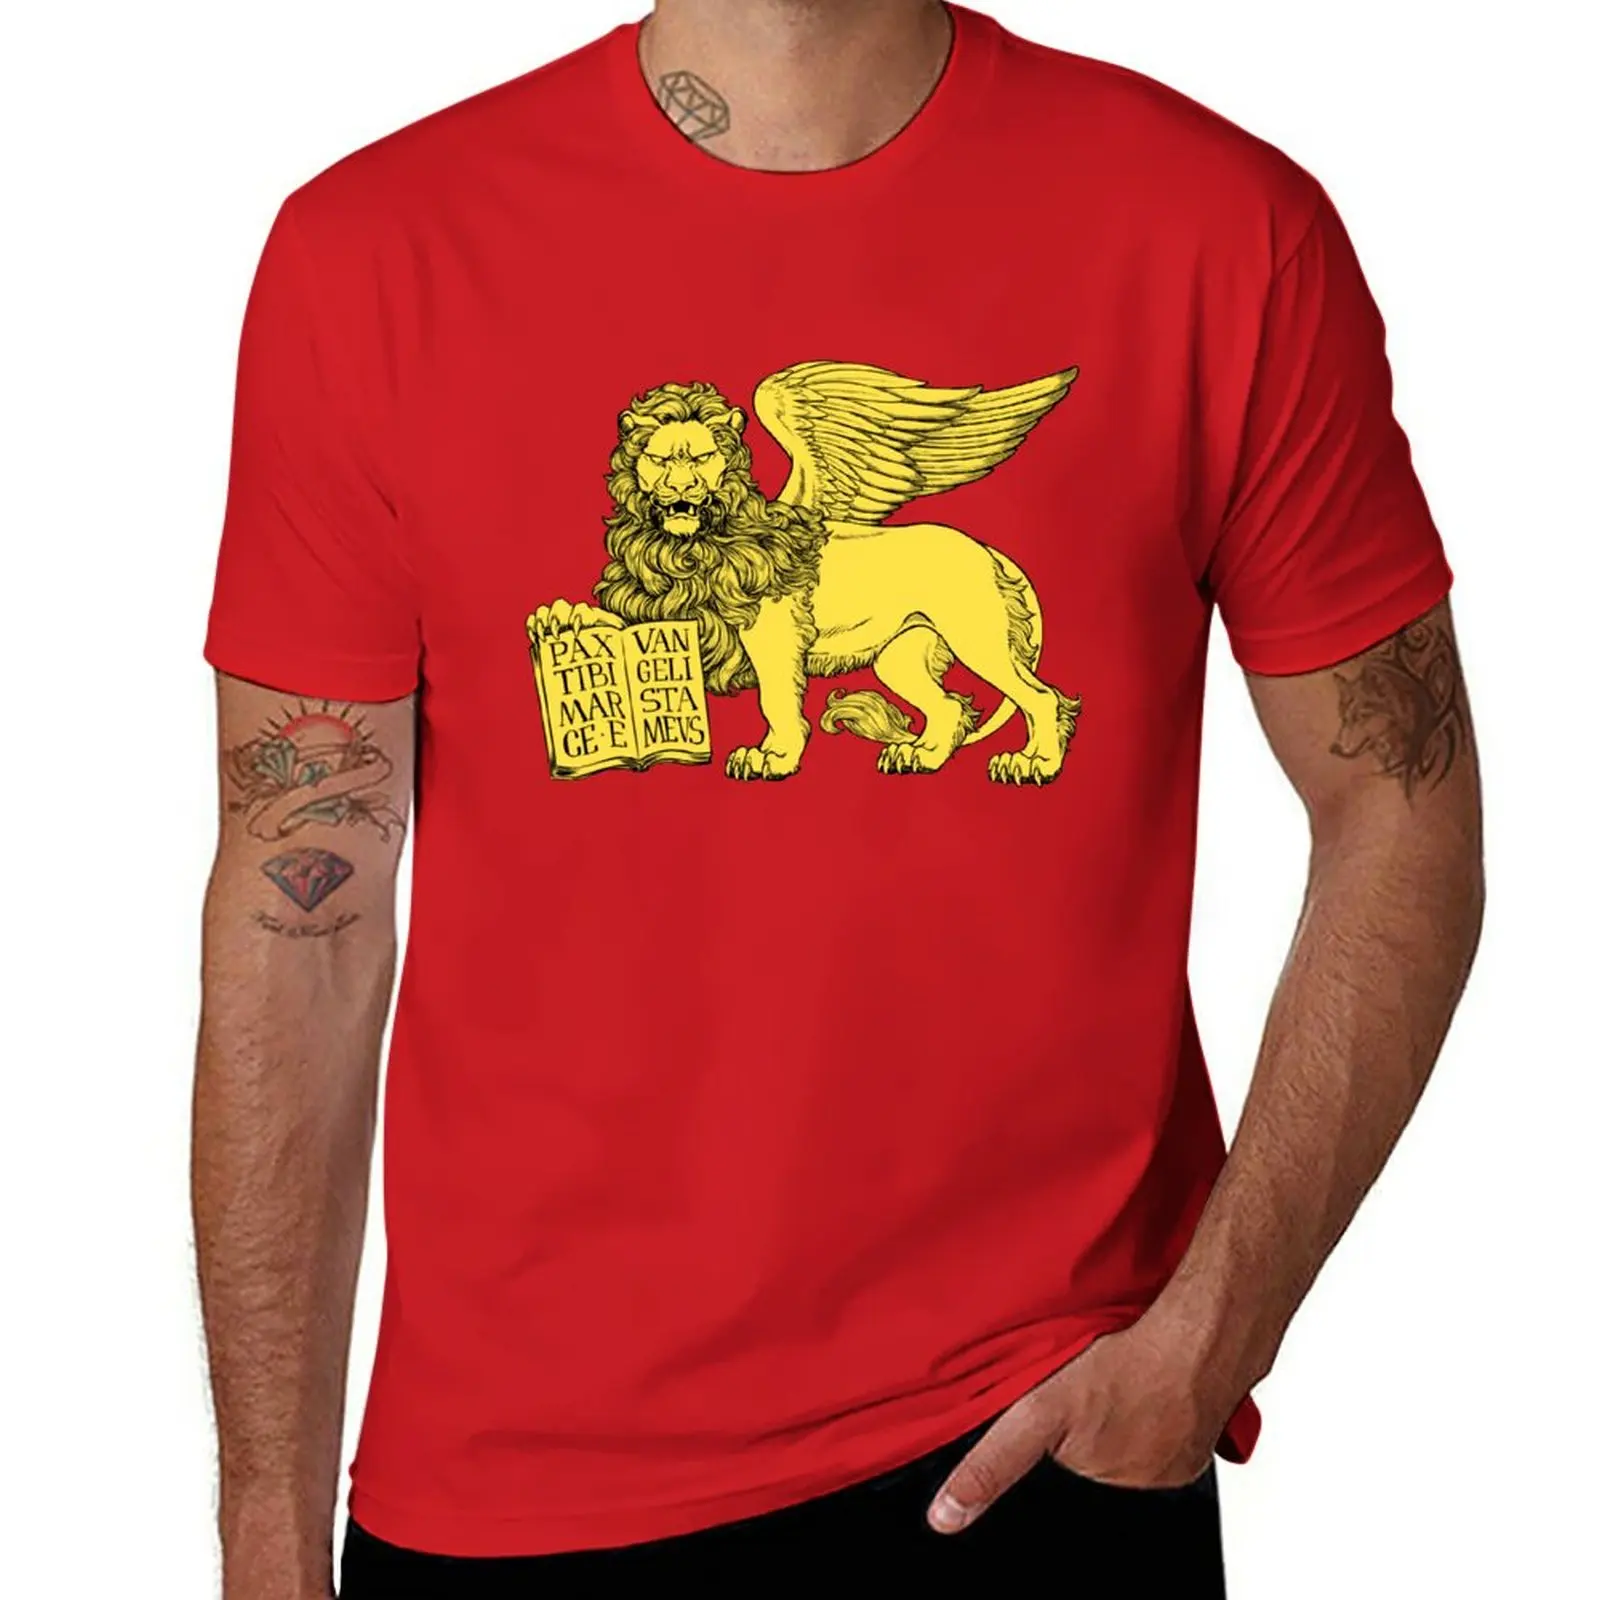 

Новинка, футболка с рисунком льва Венеции, футболки с коротким рукавом, индивидуальная футболка, футболки для мужчин